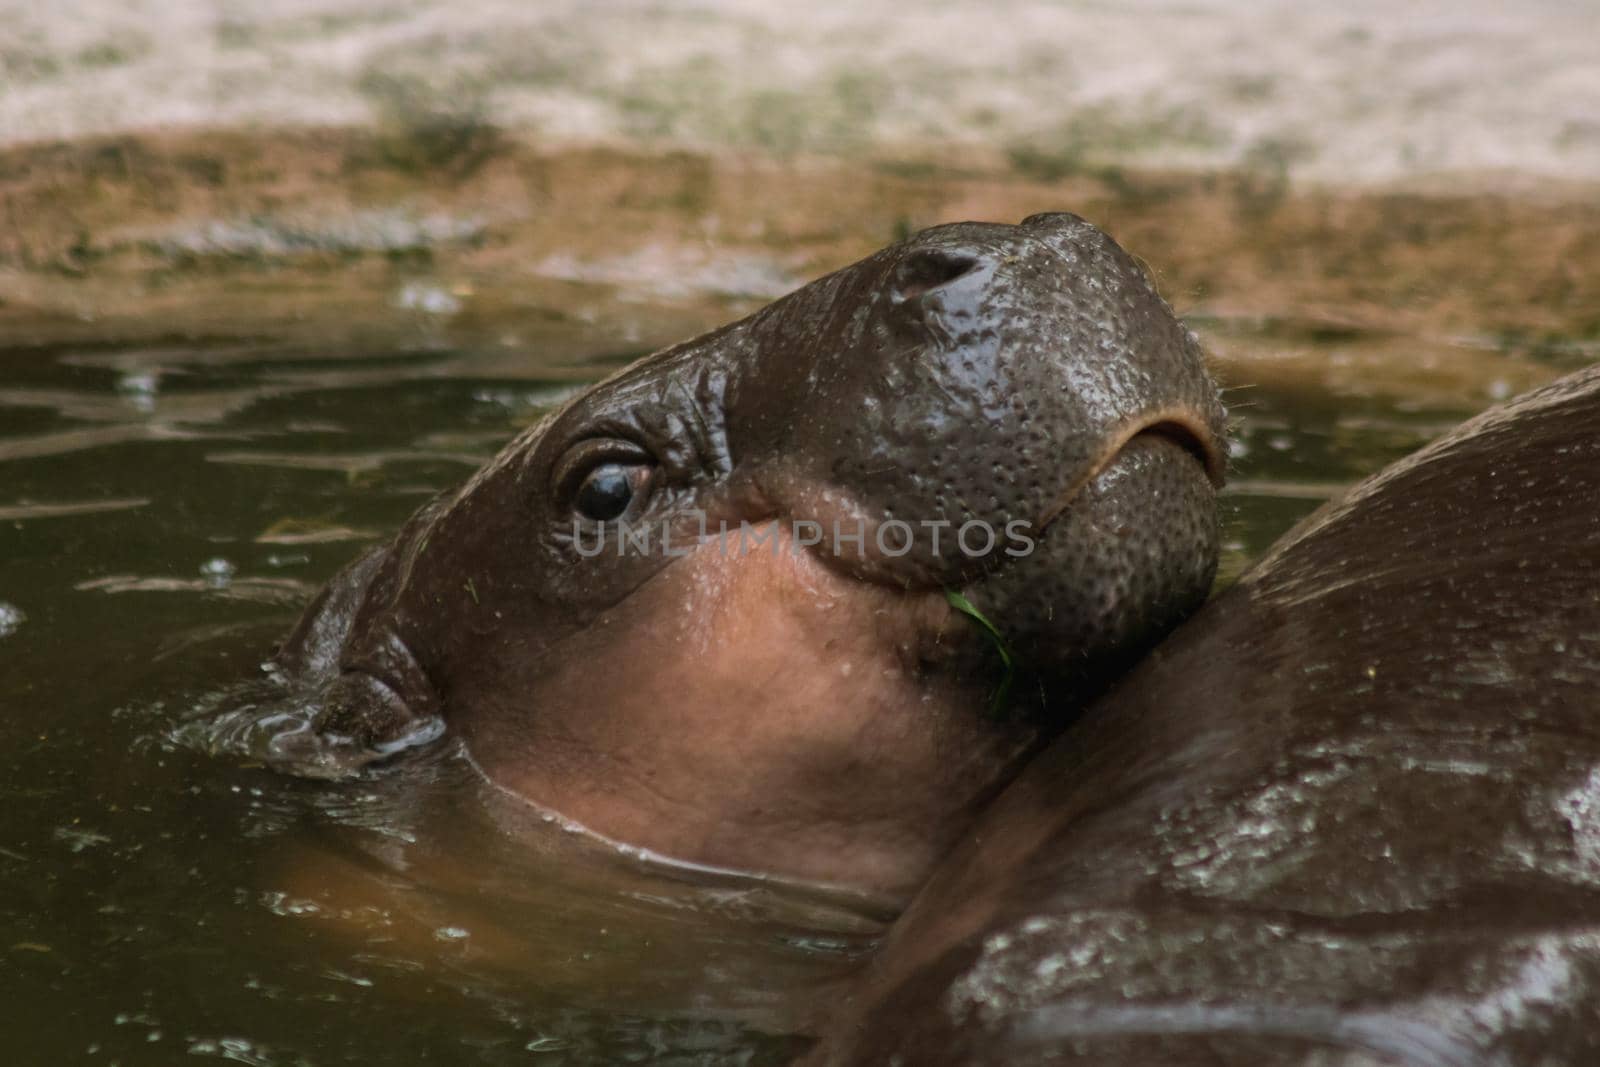 Hippopotamus in the water
Hippopotamus is a mammal.